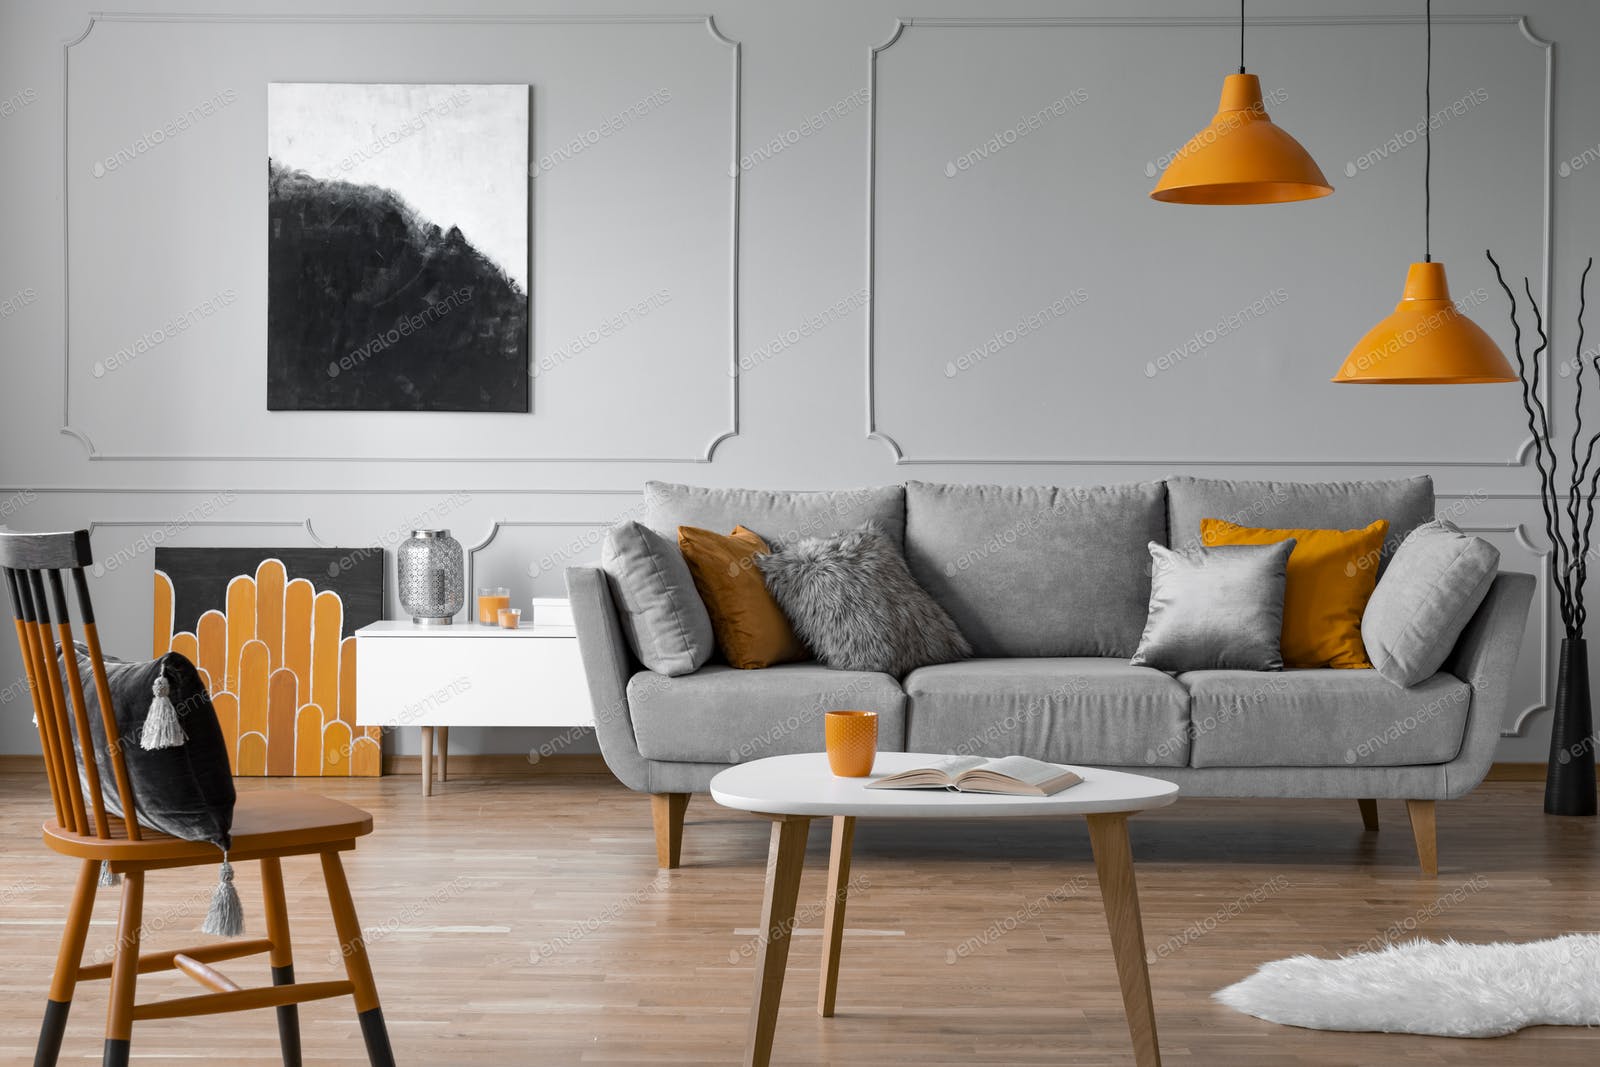 SilverOrangeLivingRoom17 10 Ways to Make Your Home Look Elegant on a Budget